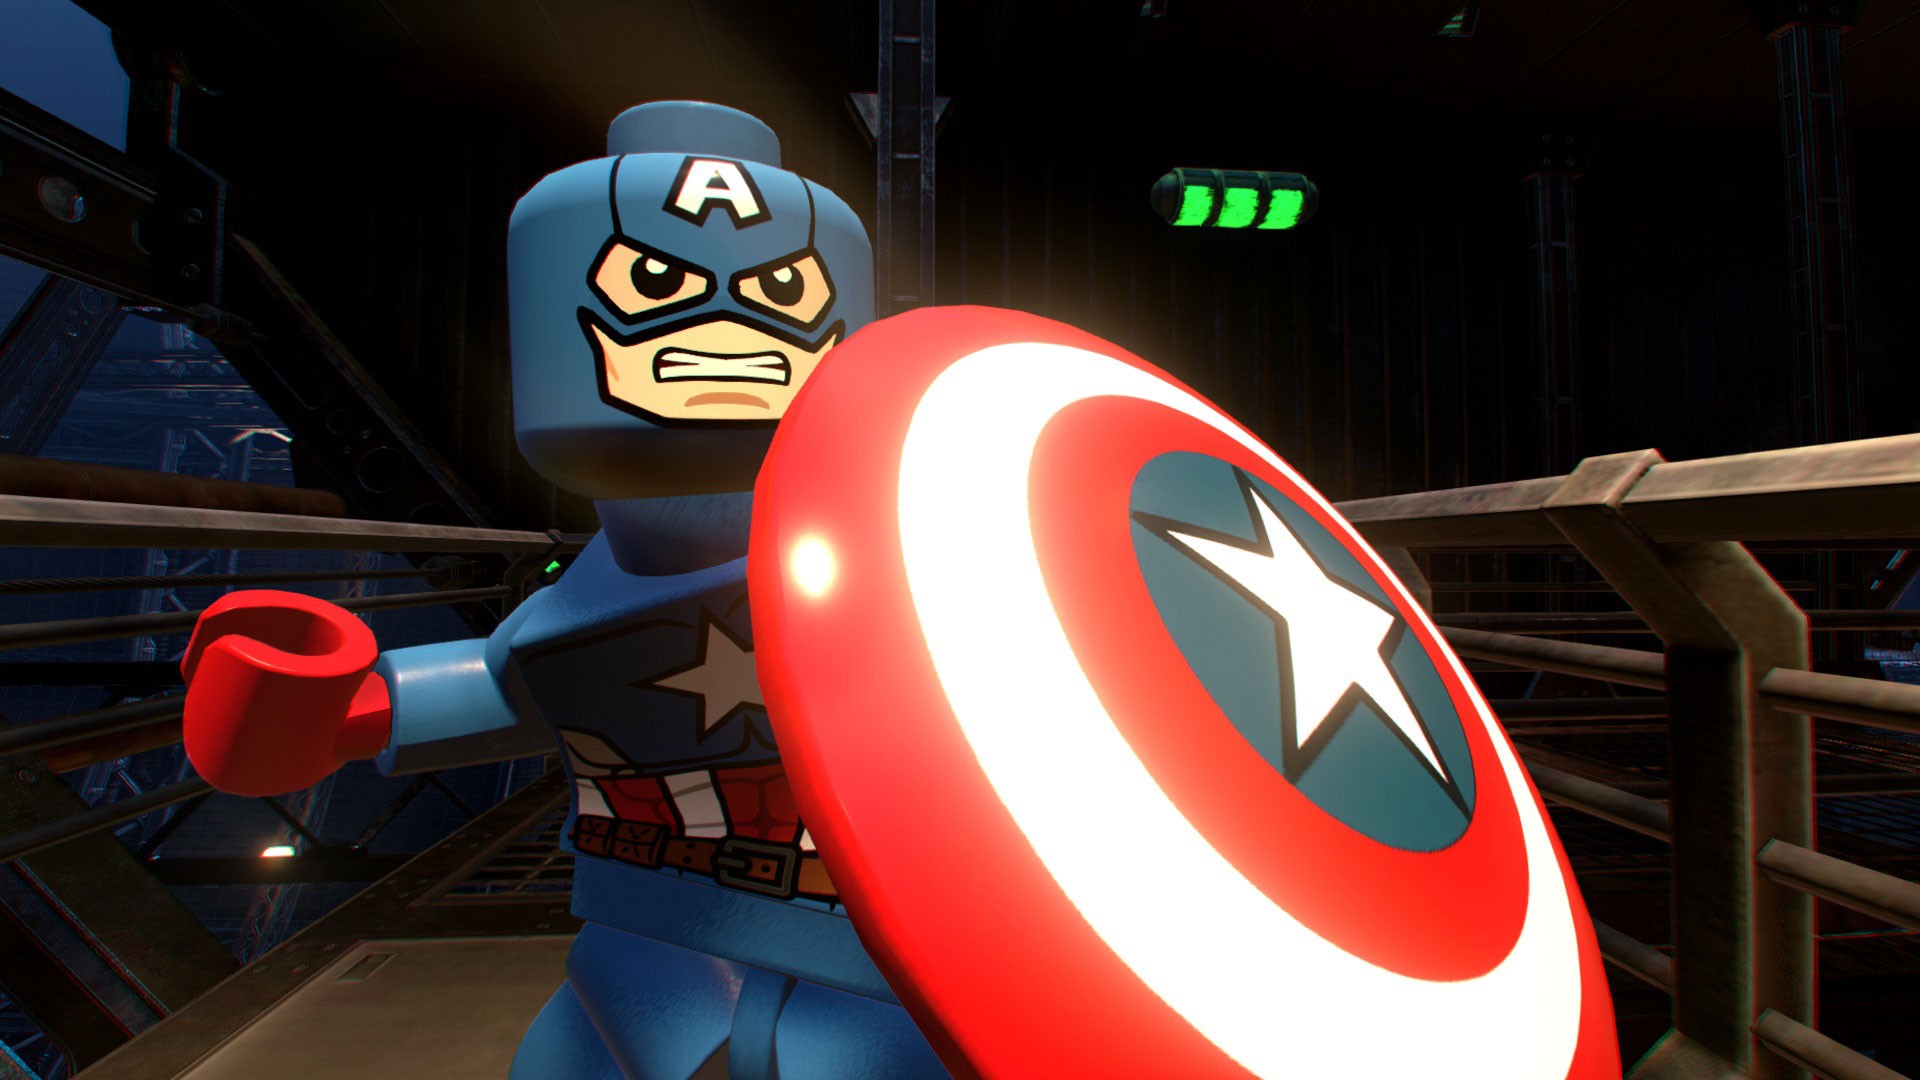 Купить Lego Marvel Super Heroes Steam